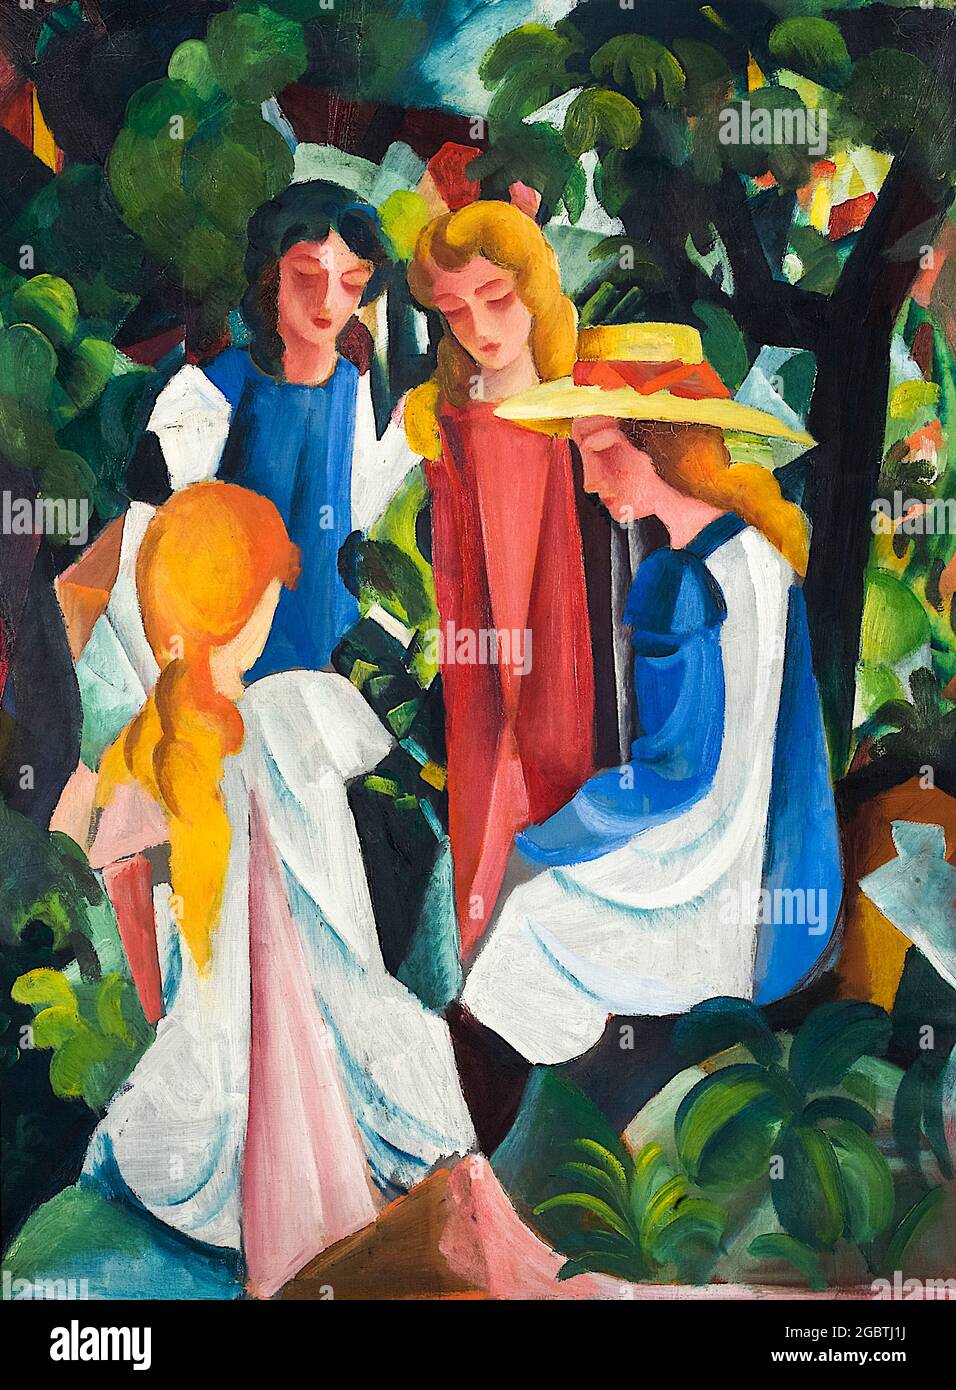 Août Macke, four Girls, peinture expressionniste, 1912-1913 Banque D'Images